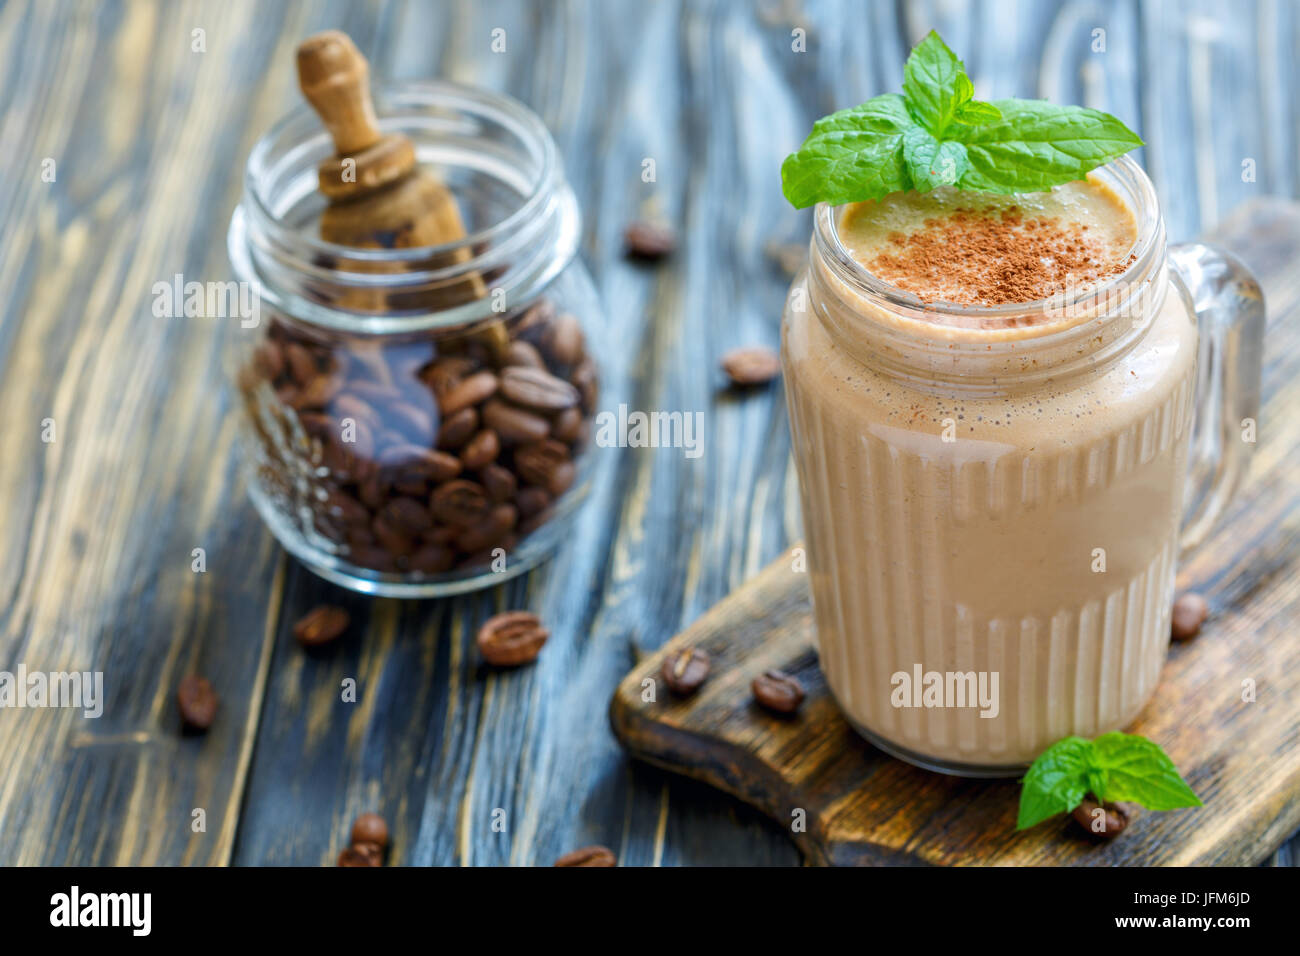 Coffee smoothie with banana and yogurt in a glass jar. Stock Photo